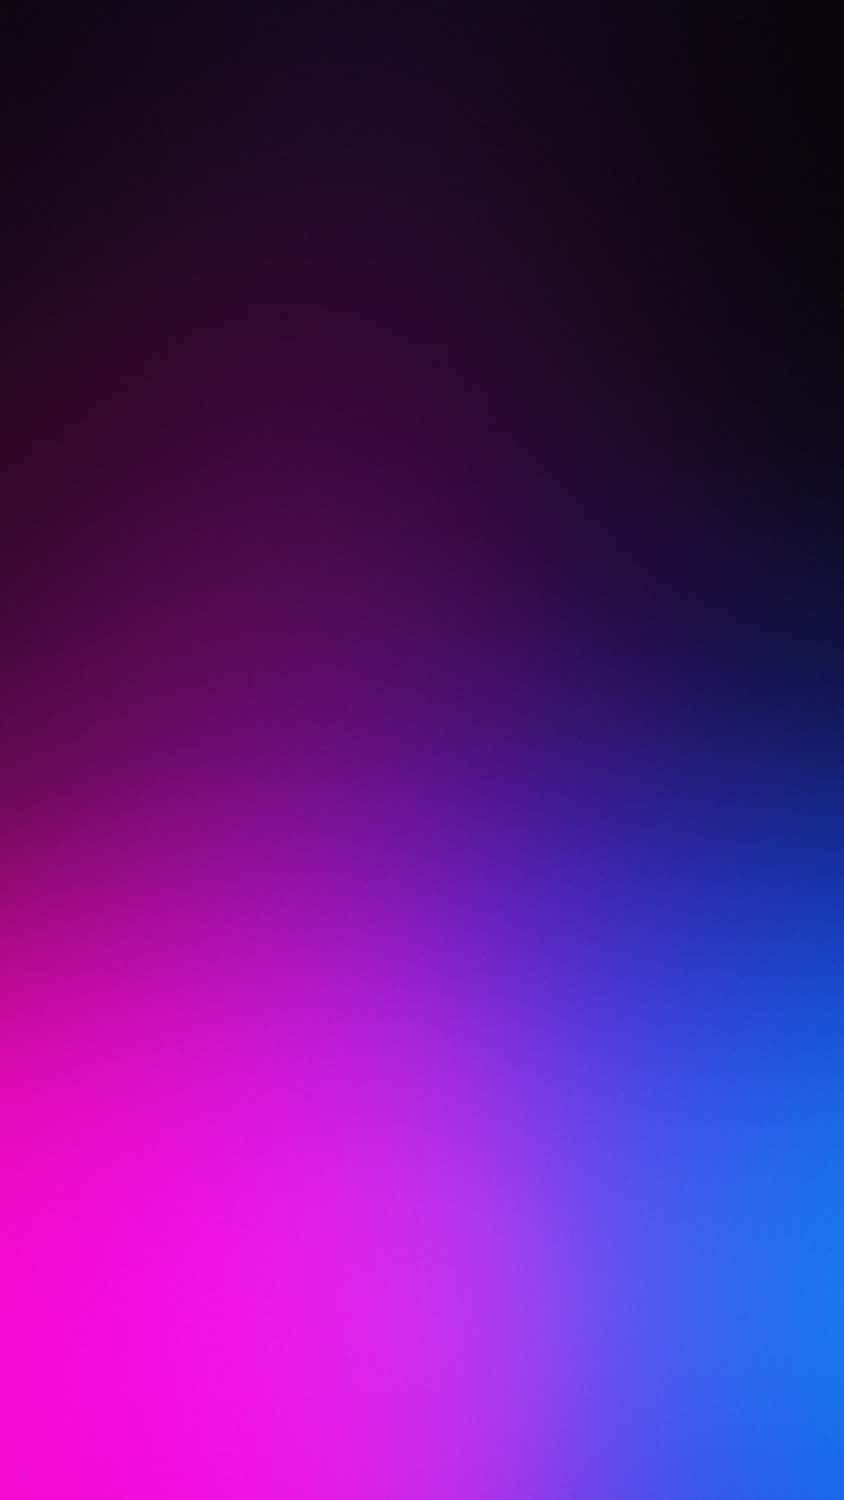 Dark Gradient With Vibrant Pink Shades Wallpaper